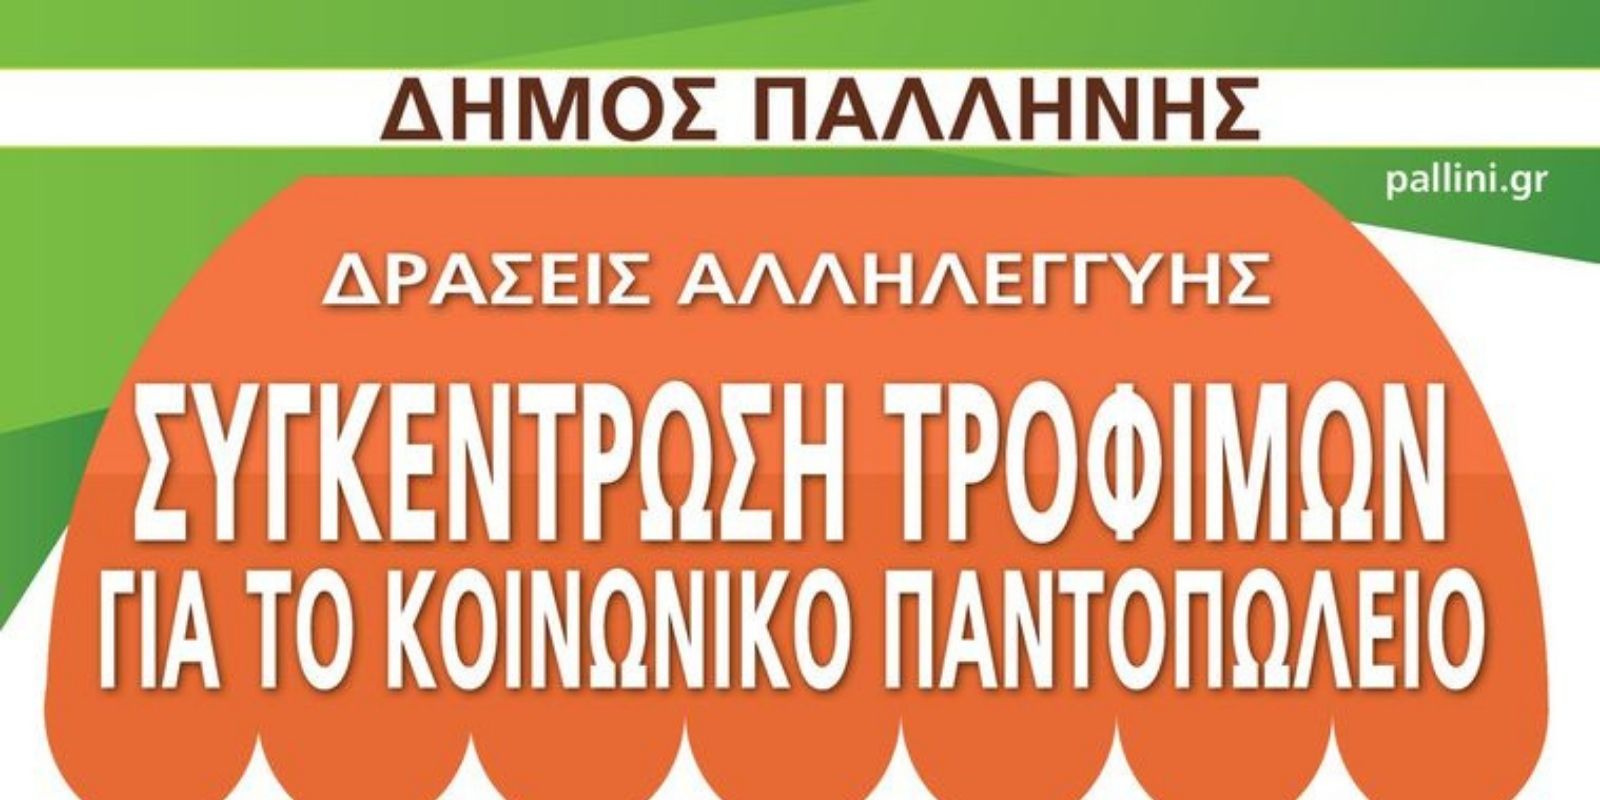 You are currently viewing Συγκέντρωση τροφίμων για το κοινωνικό παντοπωλείο Δήμου Παλλήνης